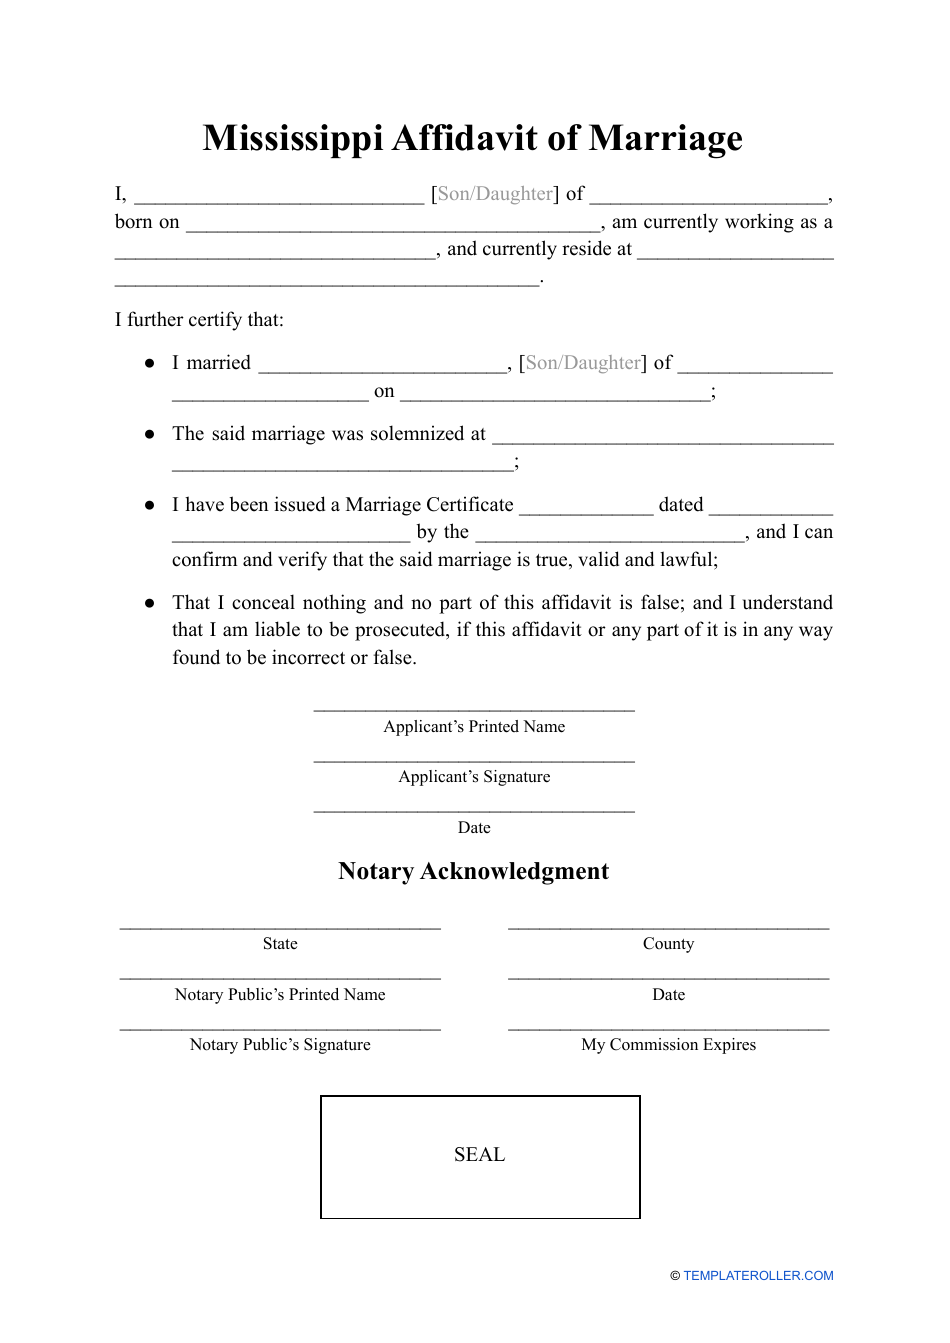 Affidavit of Marriage - Mississippi, Page 1